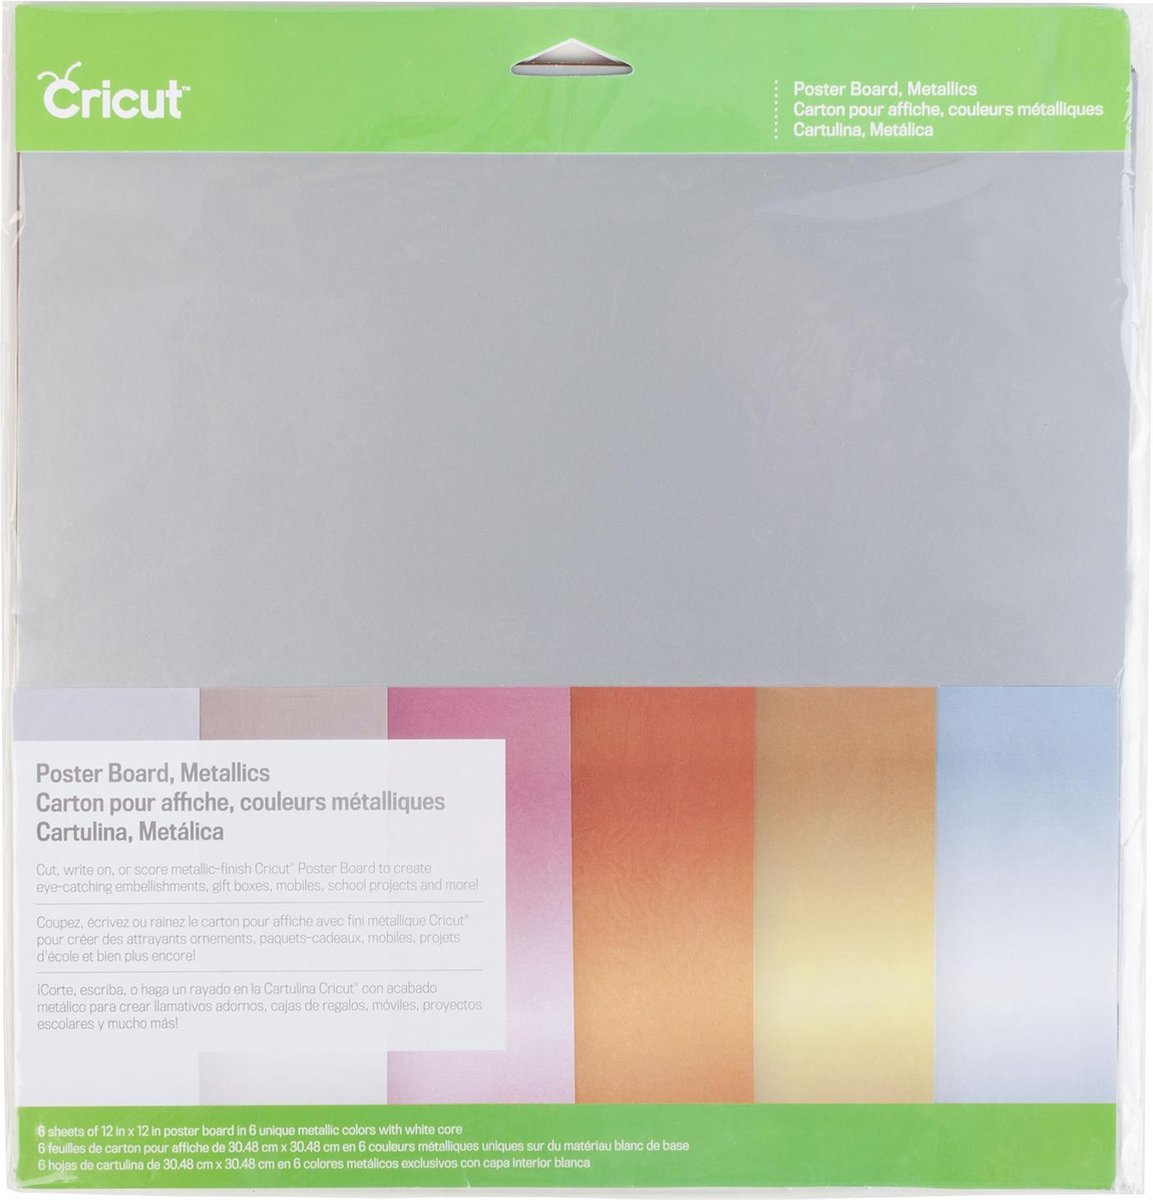 Cricut - Poster Board Metallics